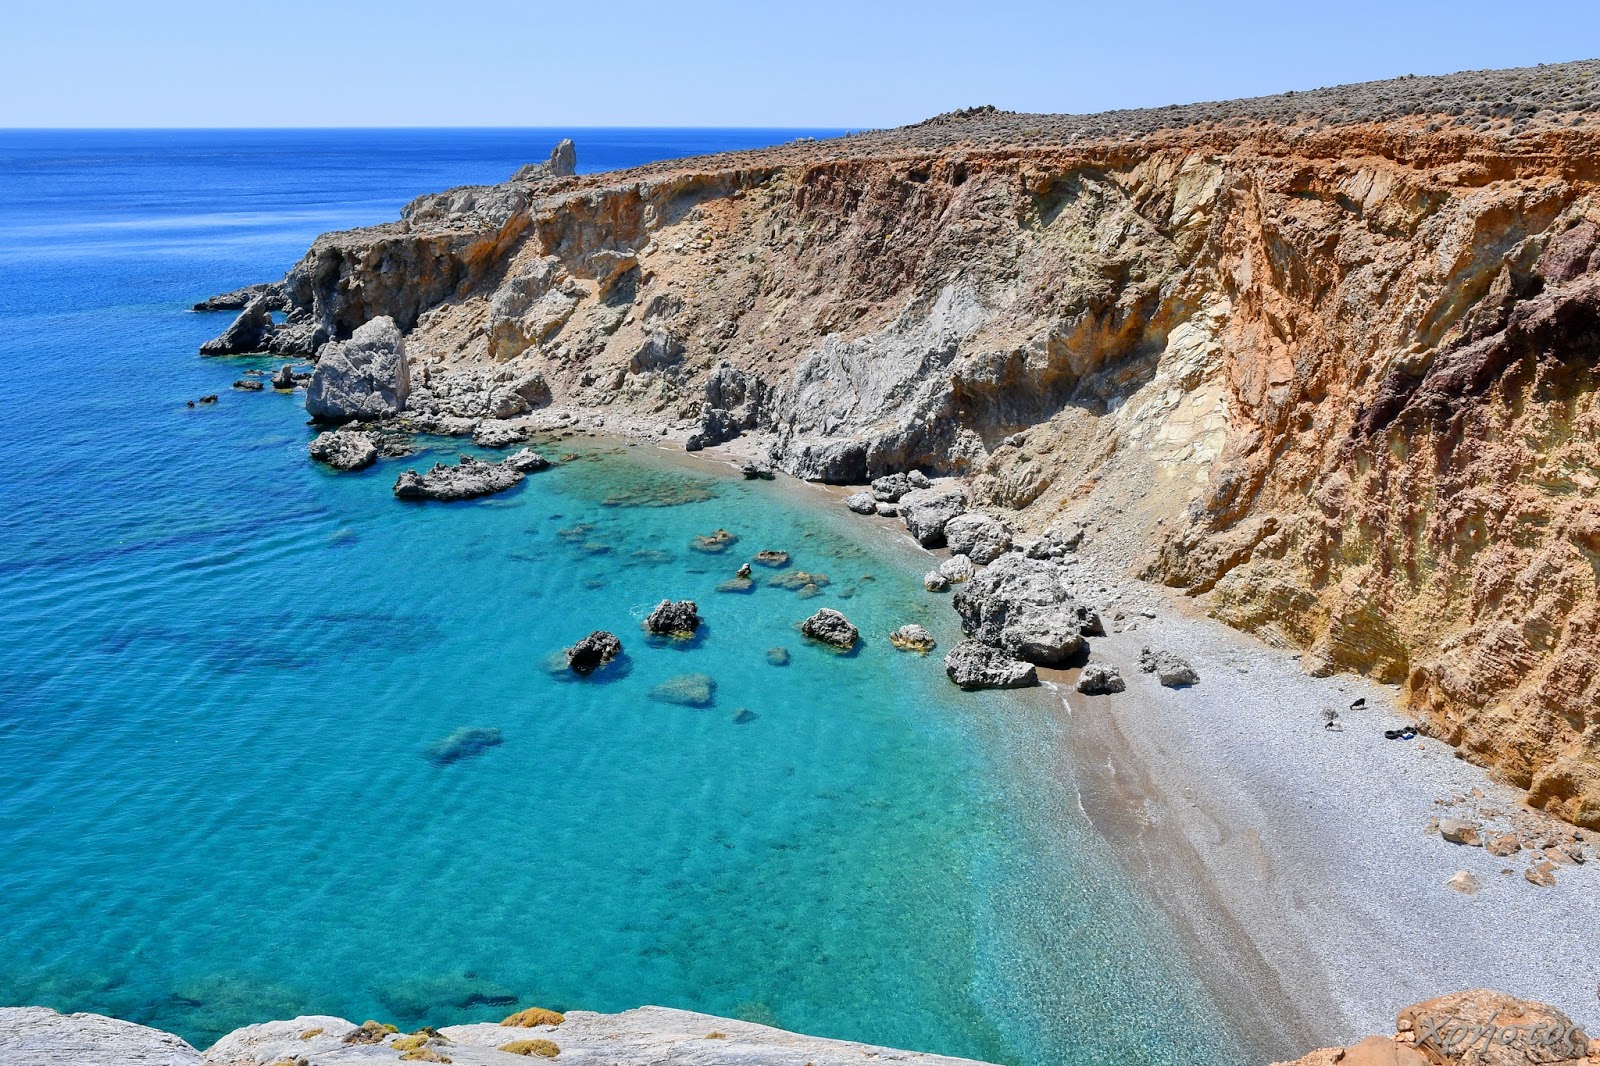 Foto von Agios Nikitas beach mit grauer kies Oberfläche